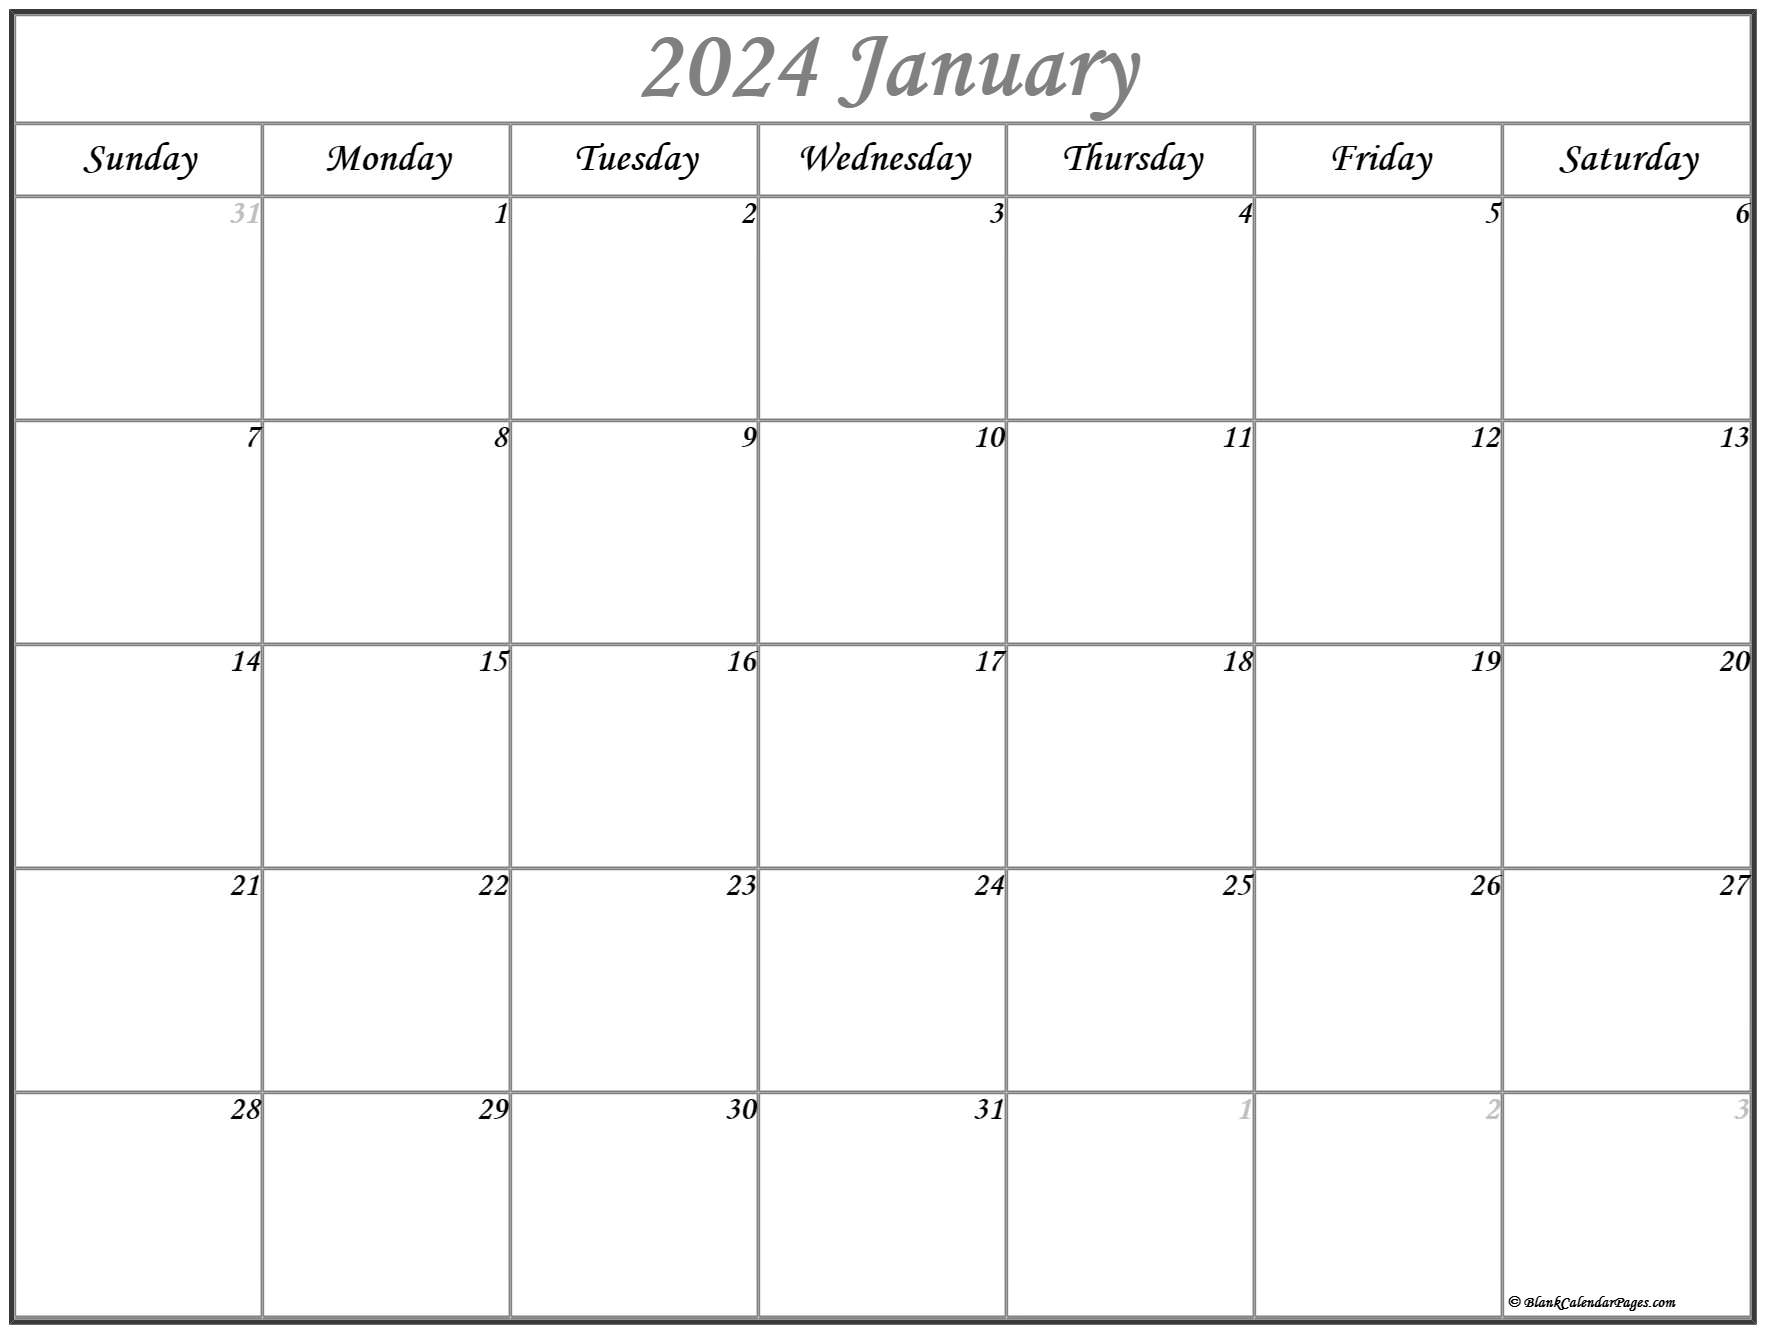 2024 Monthly Calendar Pdf Free Printable Templates 2024 Monthly - Free Printable 2024 January Calendar